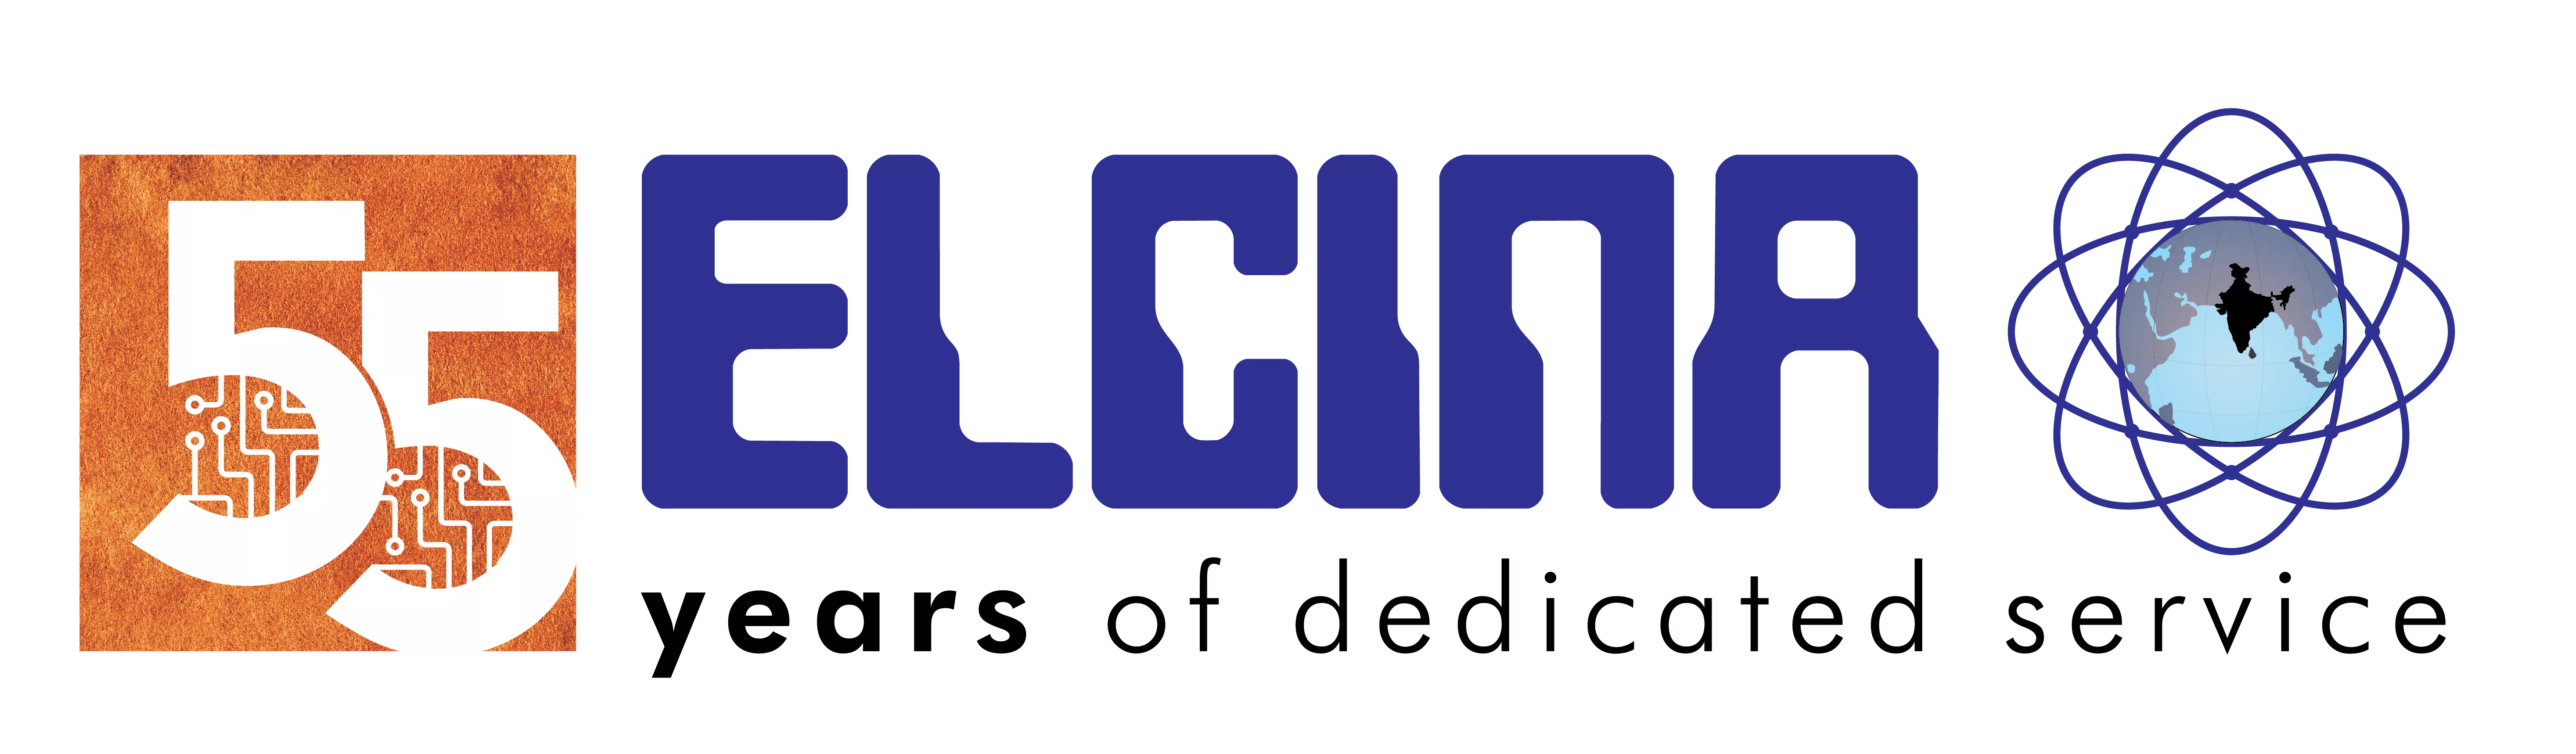 Elcina logo